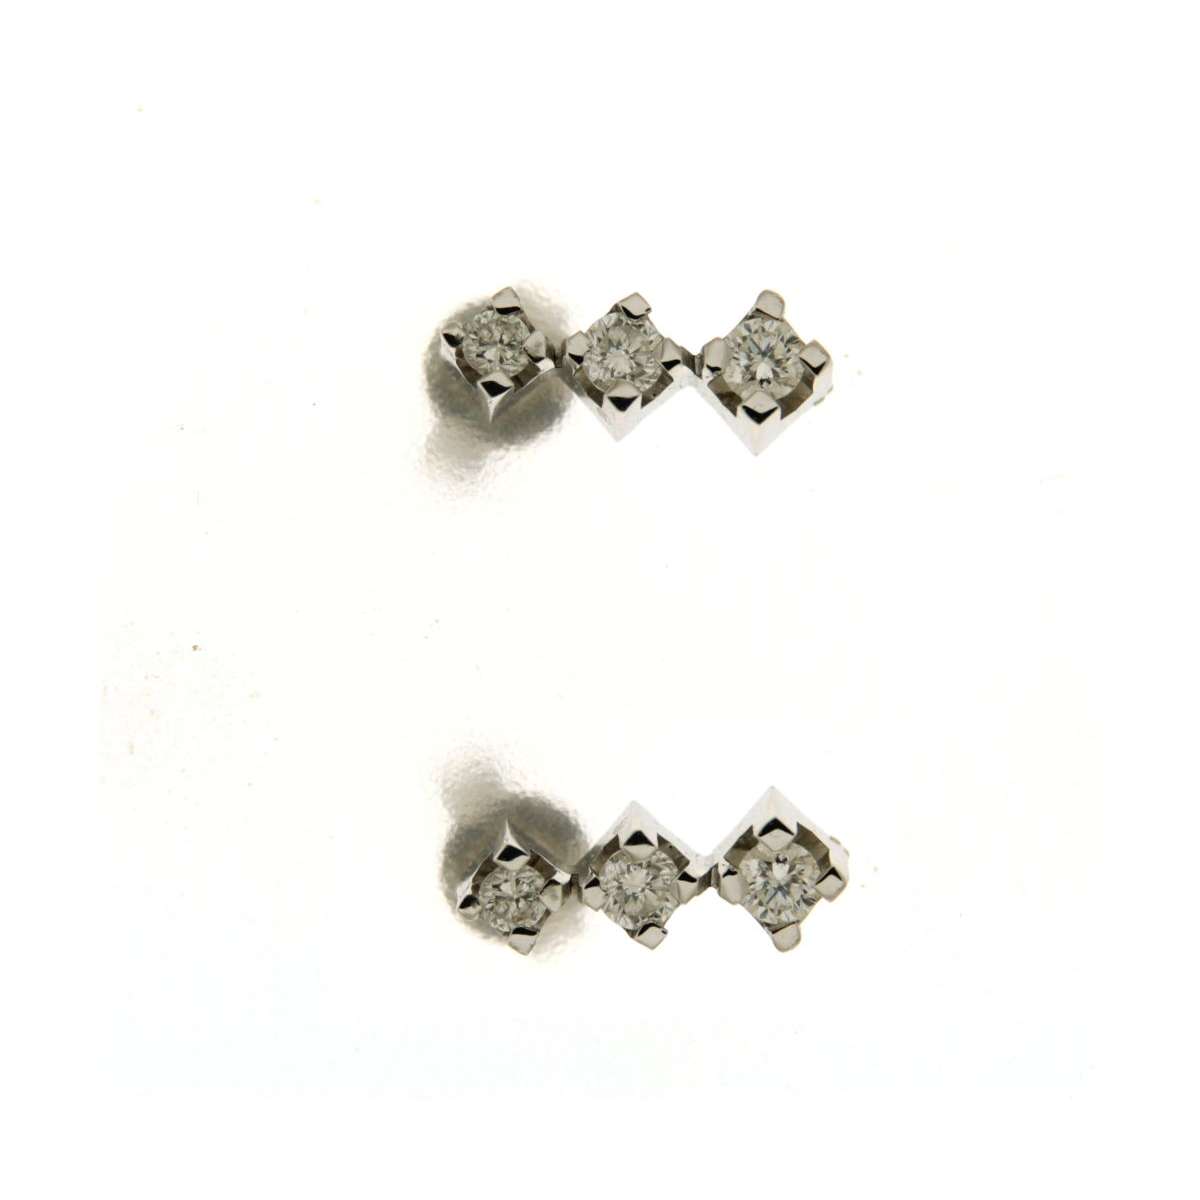 Trilogy earrings 0.35 carats diamonds G-VS1